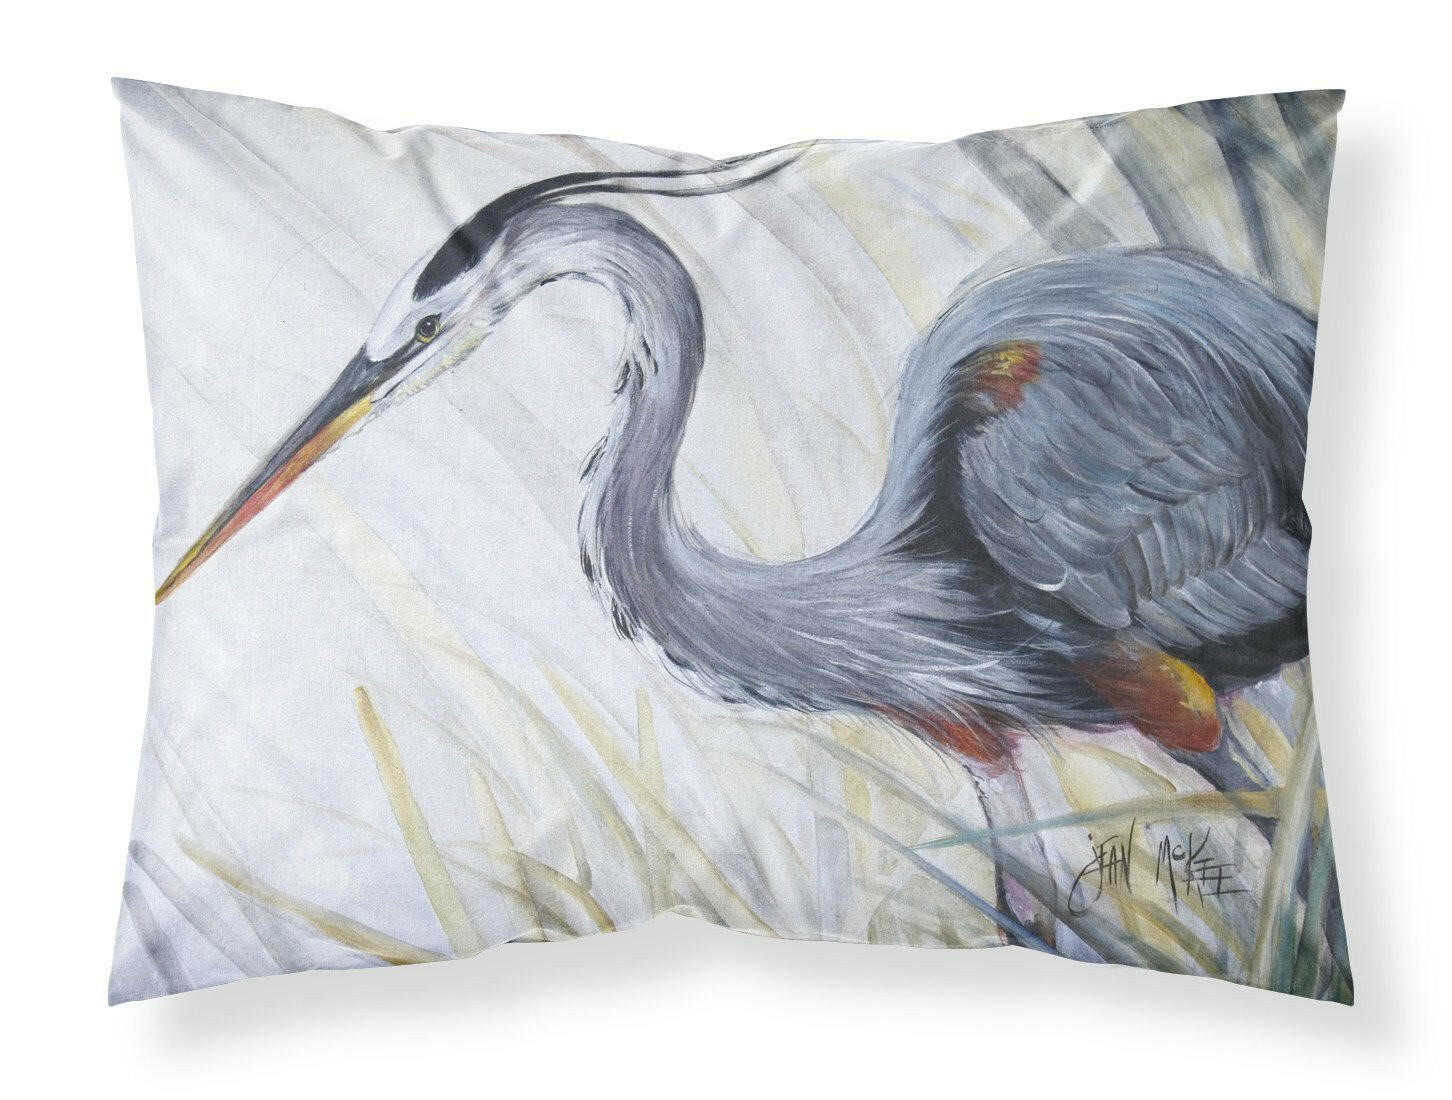 Blue Heron Frog hunting Fabric Standard Pillowcase JMK1017PILLOWCASE by Caroline's Treasures